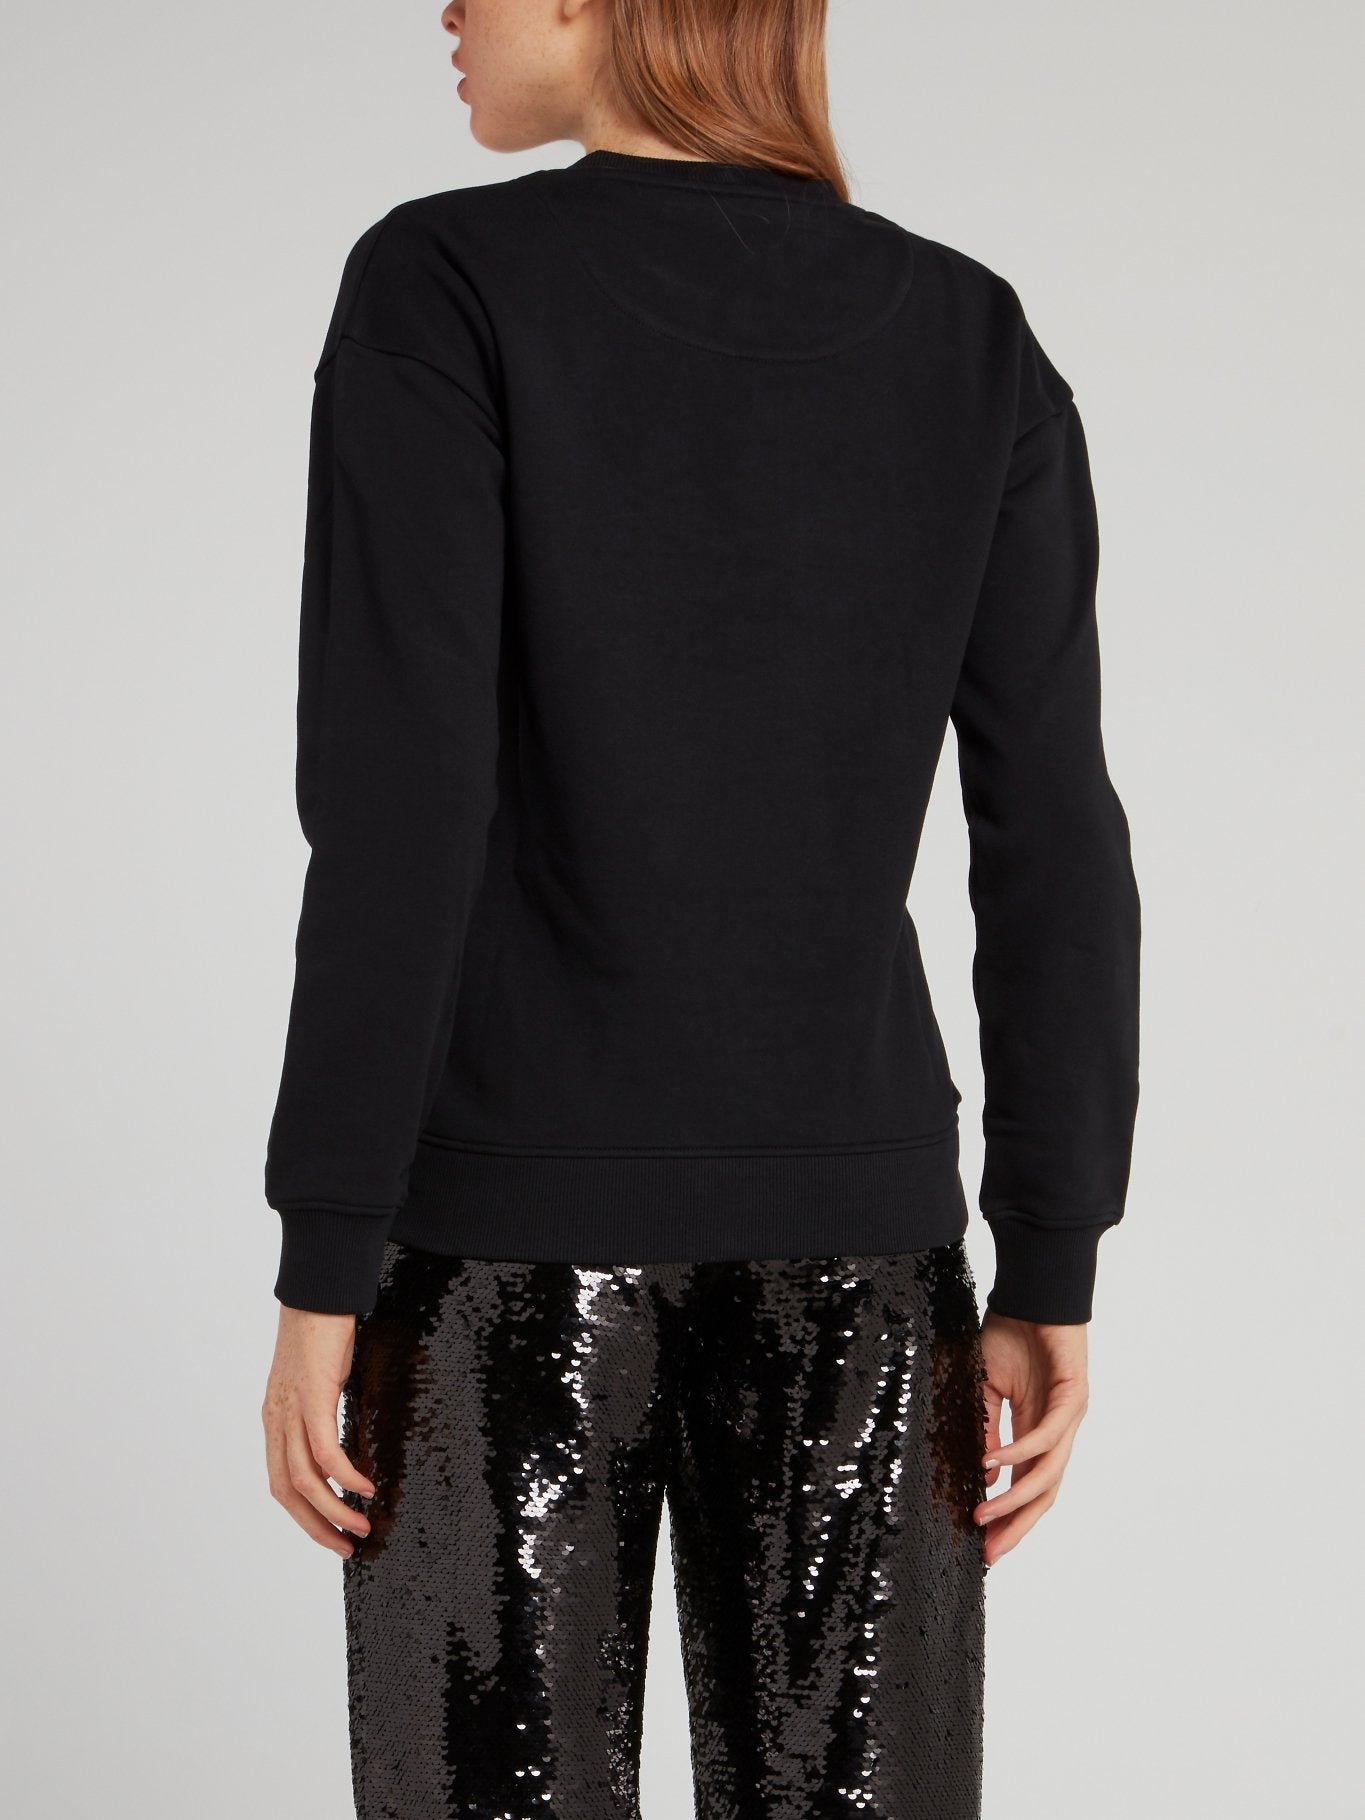 Black Sequin Embellished Cotton Sweatshirt